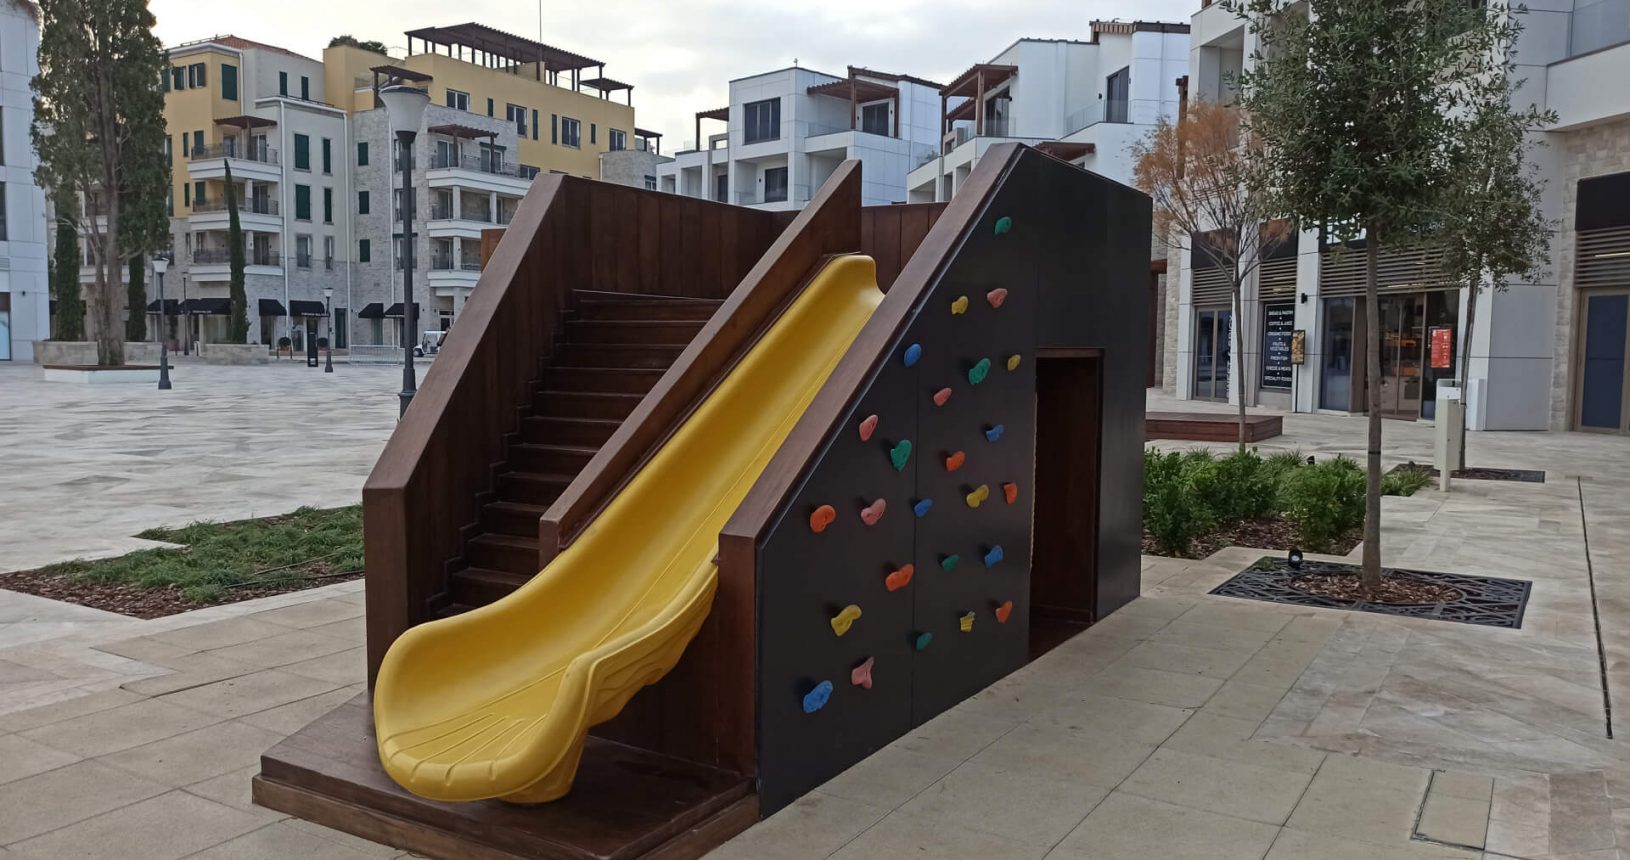 Playground for kids Portonovi